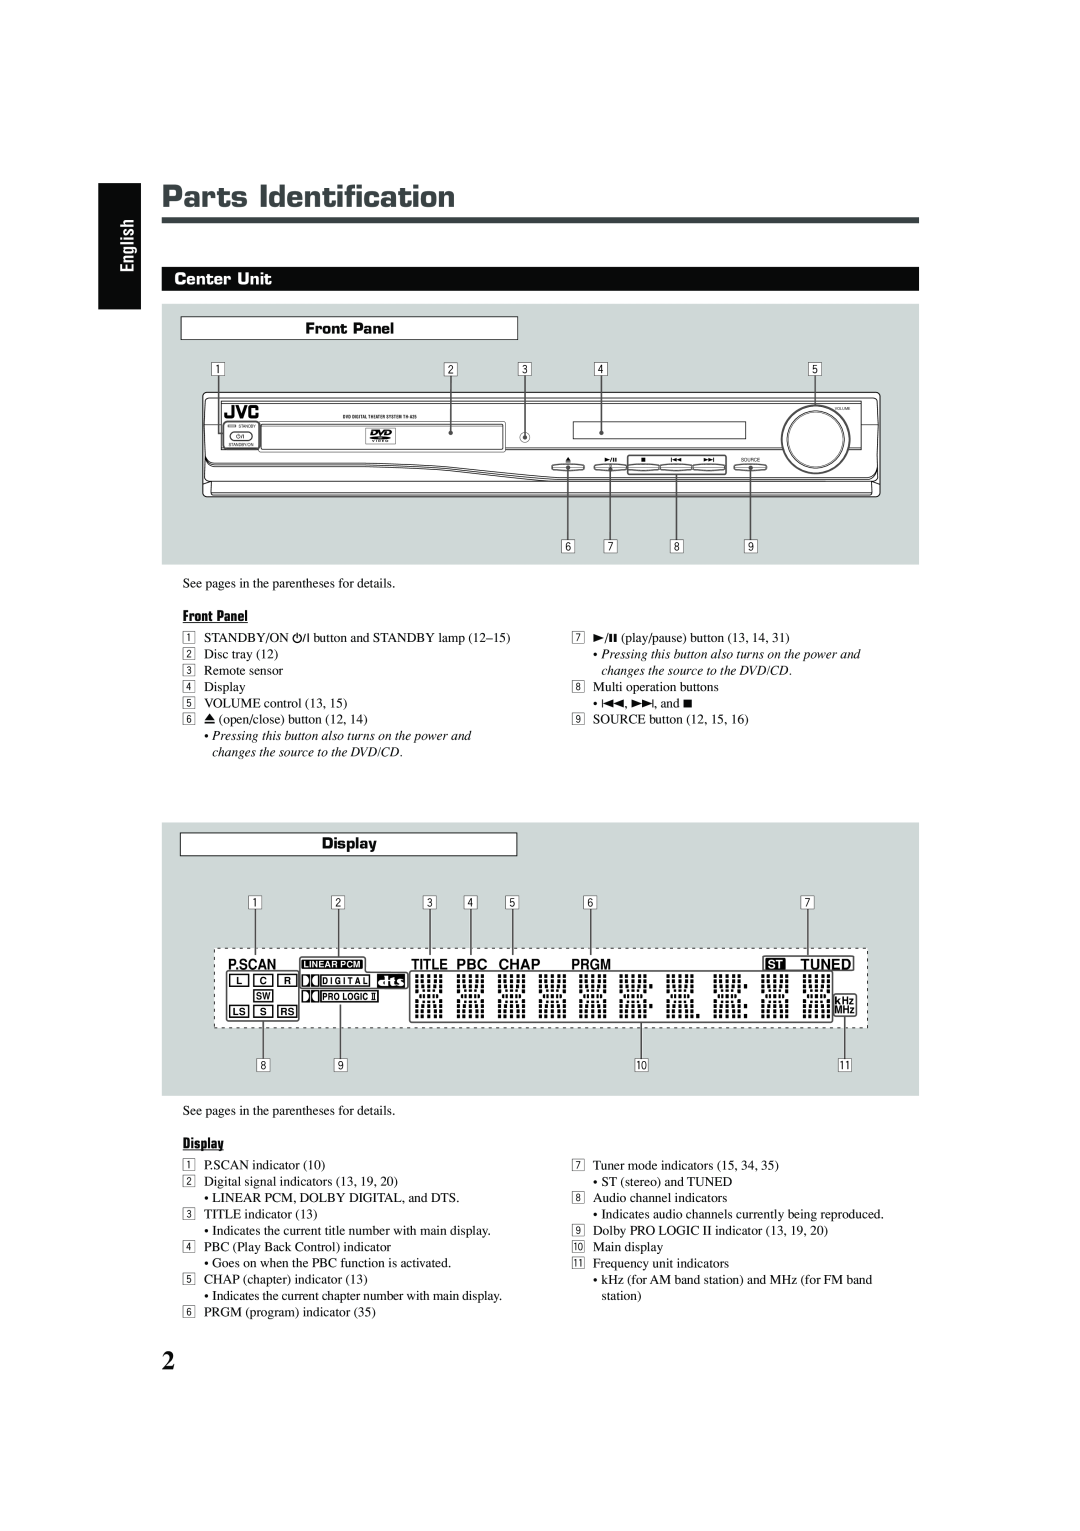 JVC TH-A25 manual Parts Identification, English, Center Unit, Front Panel, Display, Title Pbc, Chap, Prgm, Tuned 